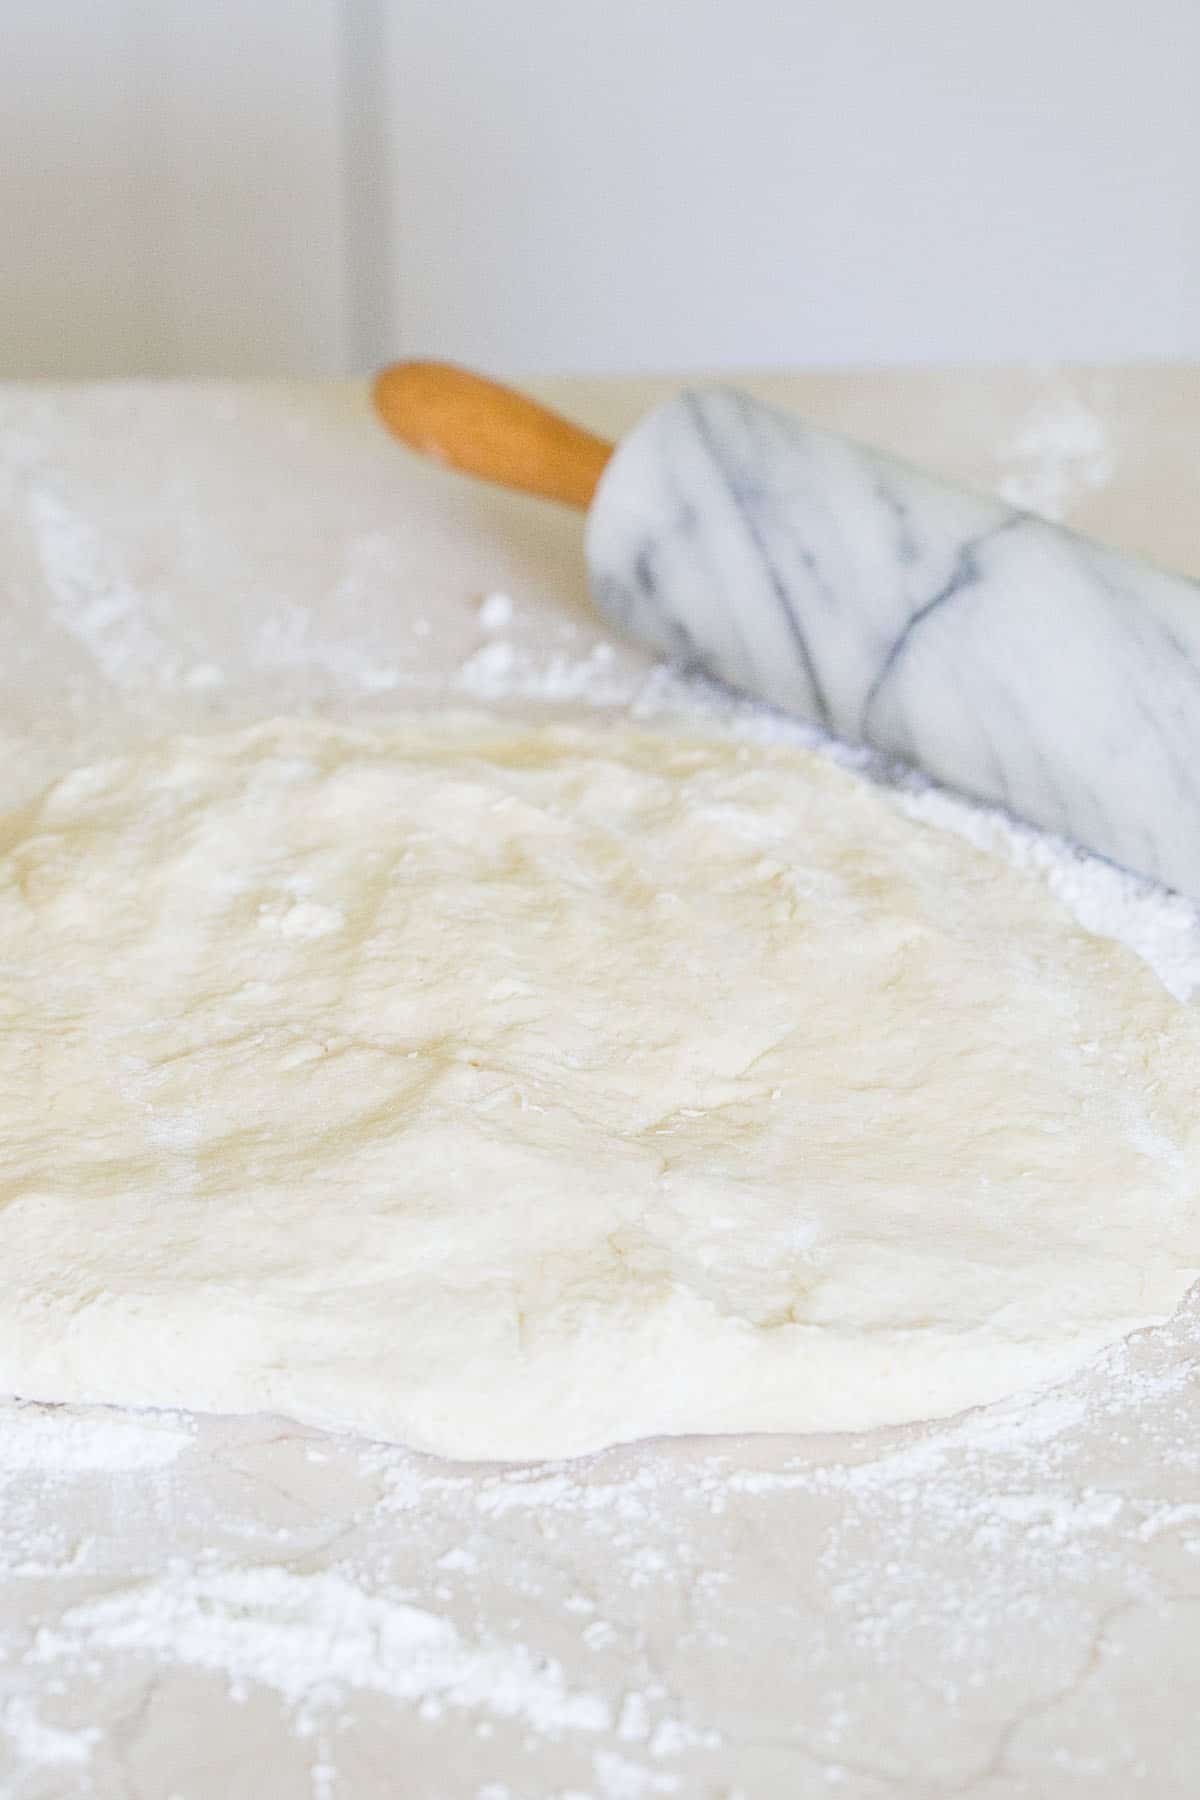 making dough for homemade beignets